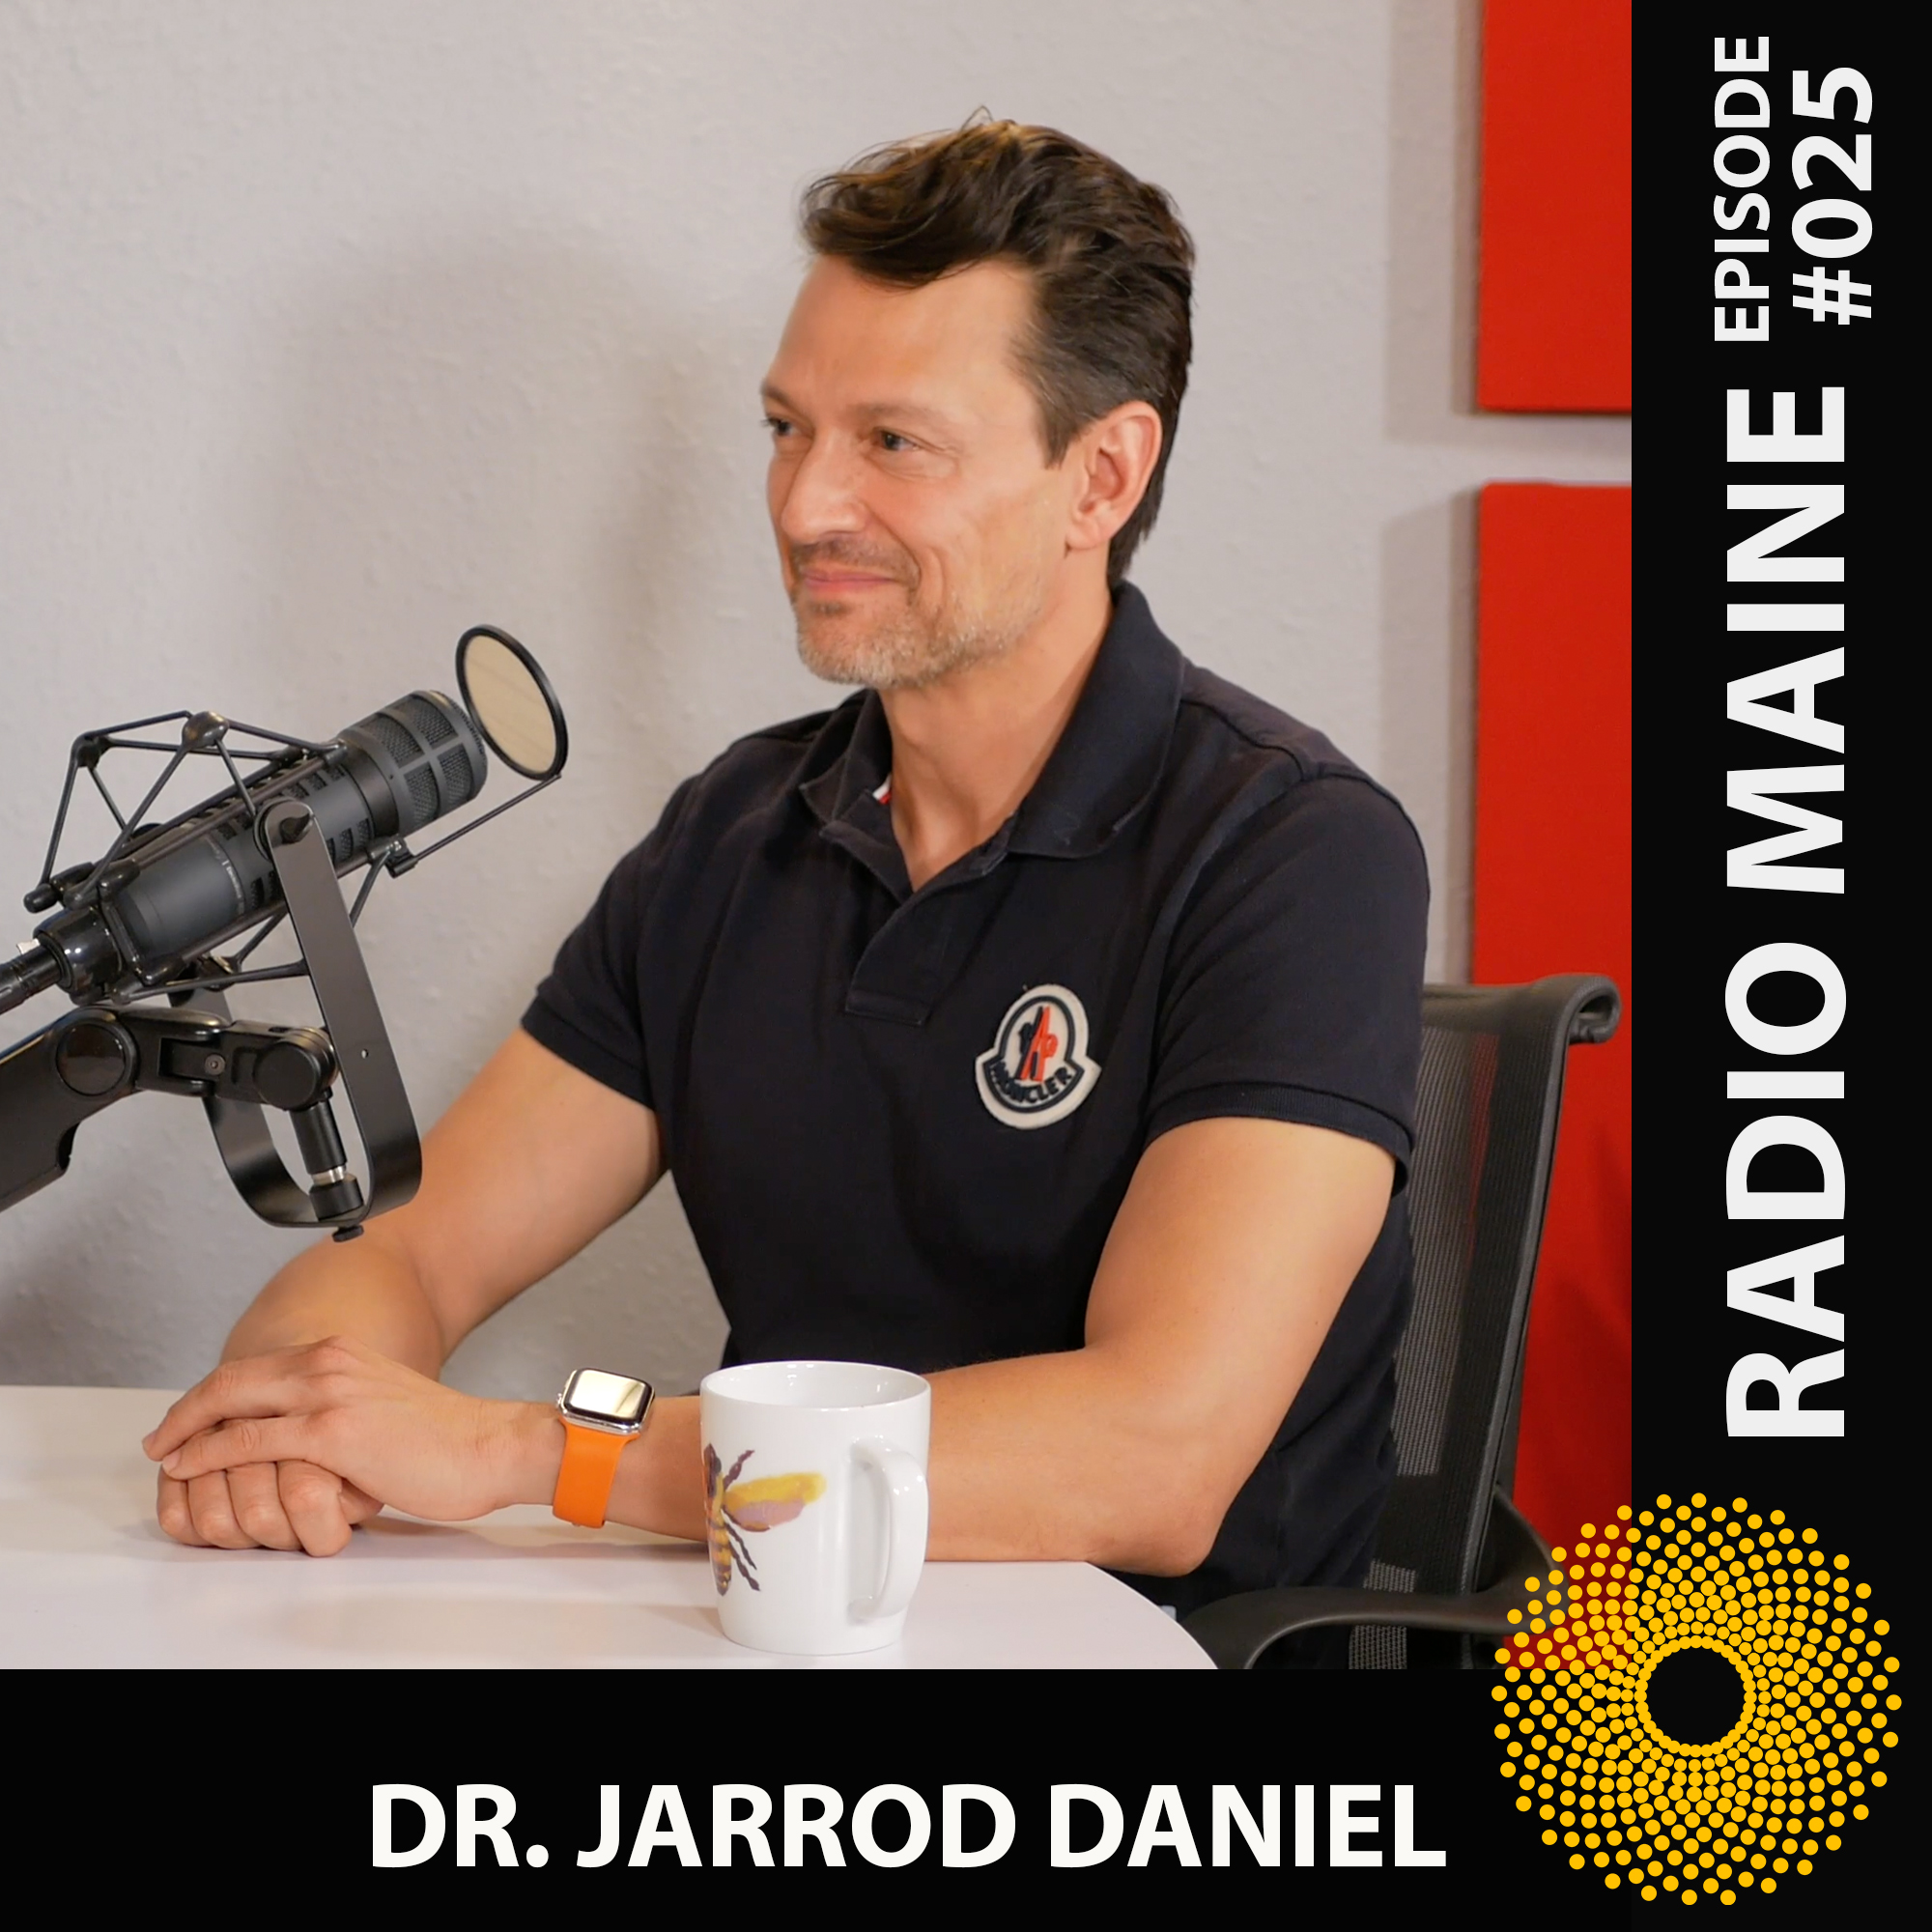 Dr. Jarrod Daniel, plastic surgeon, being interviewed on Radio Maine with Dr. Lisa Belisle